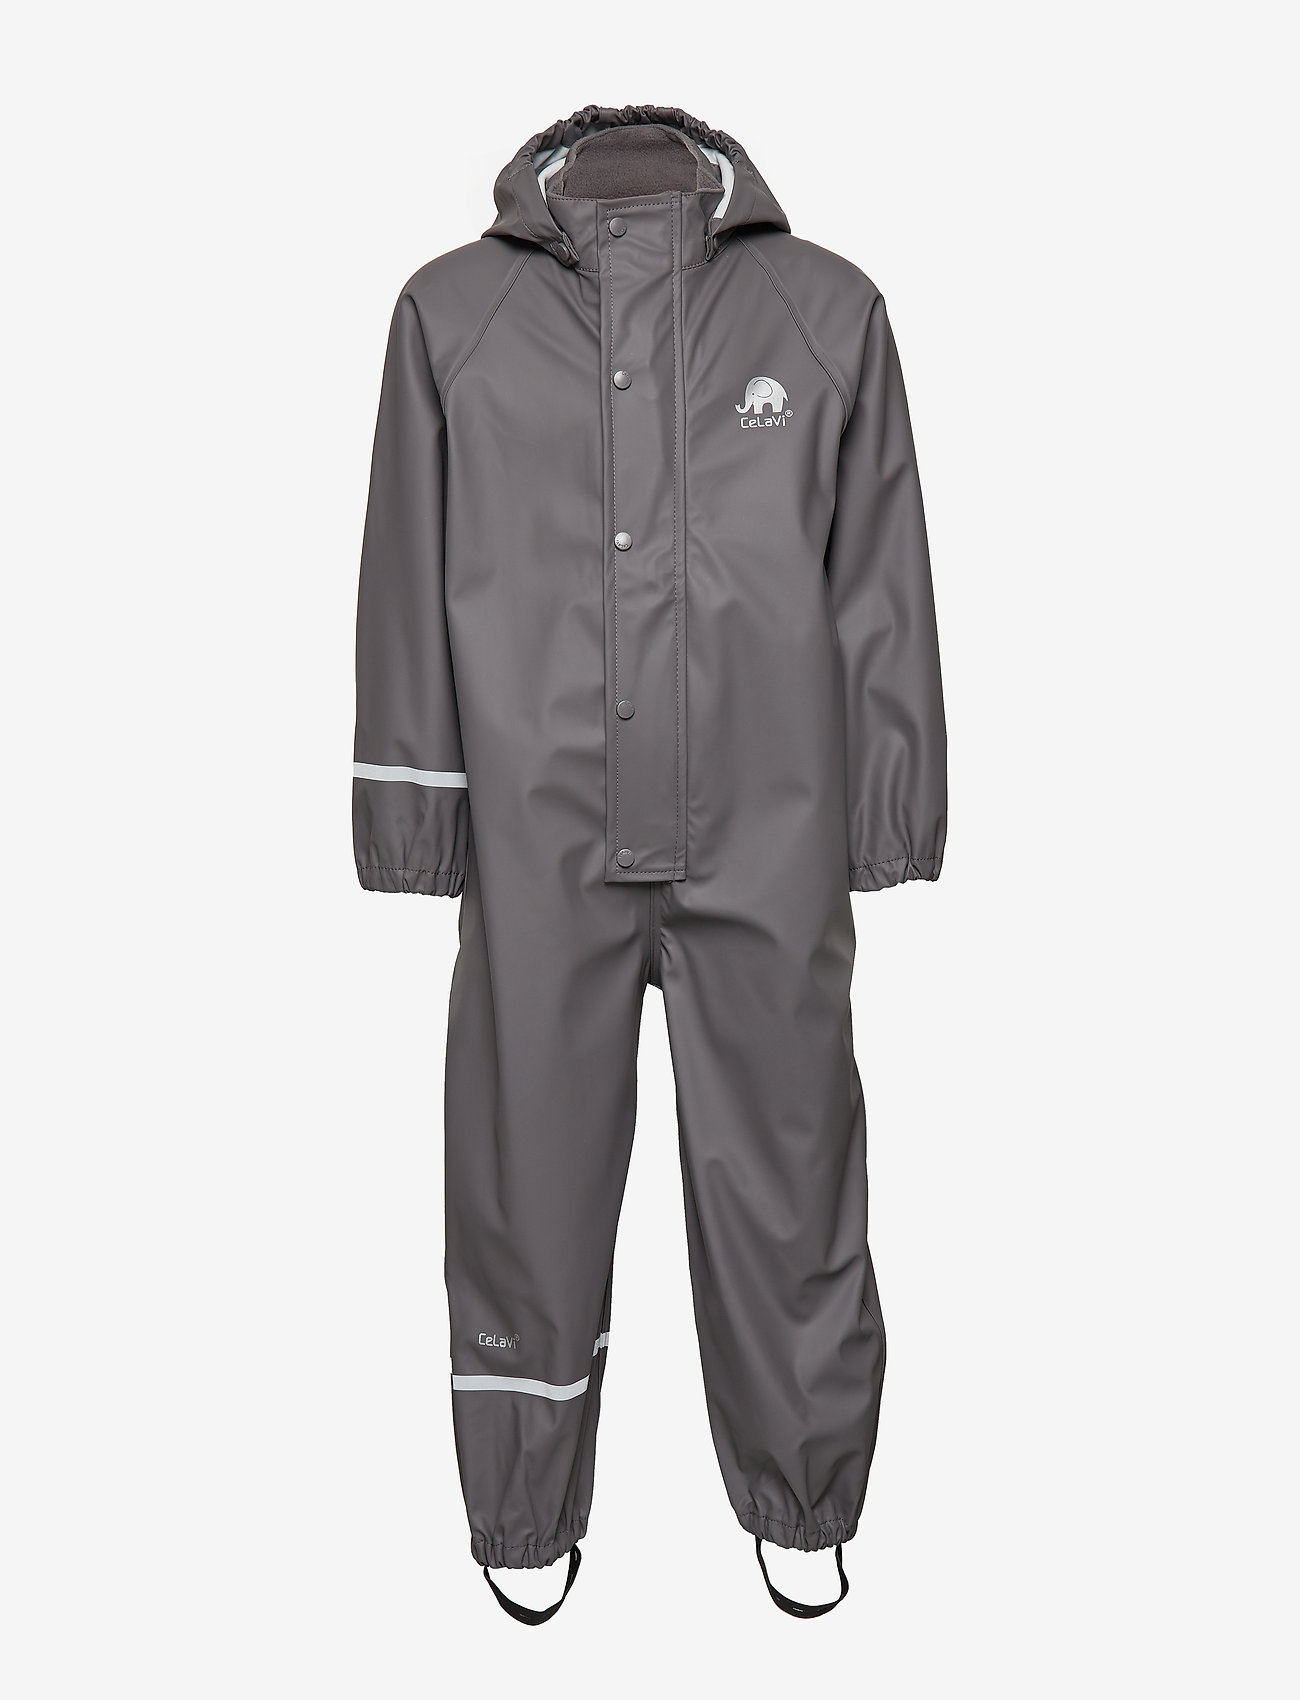 CeLaVi - Rainwear suit -Solid PU - rainwear coveralls - grey - 1